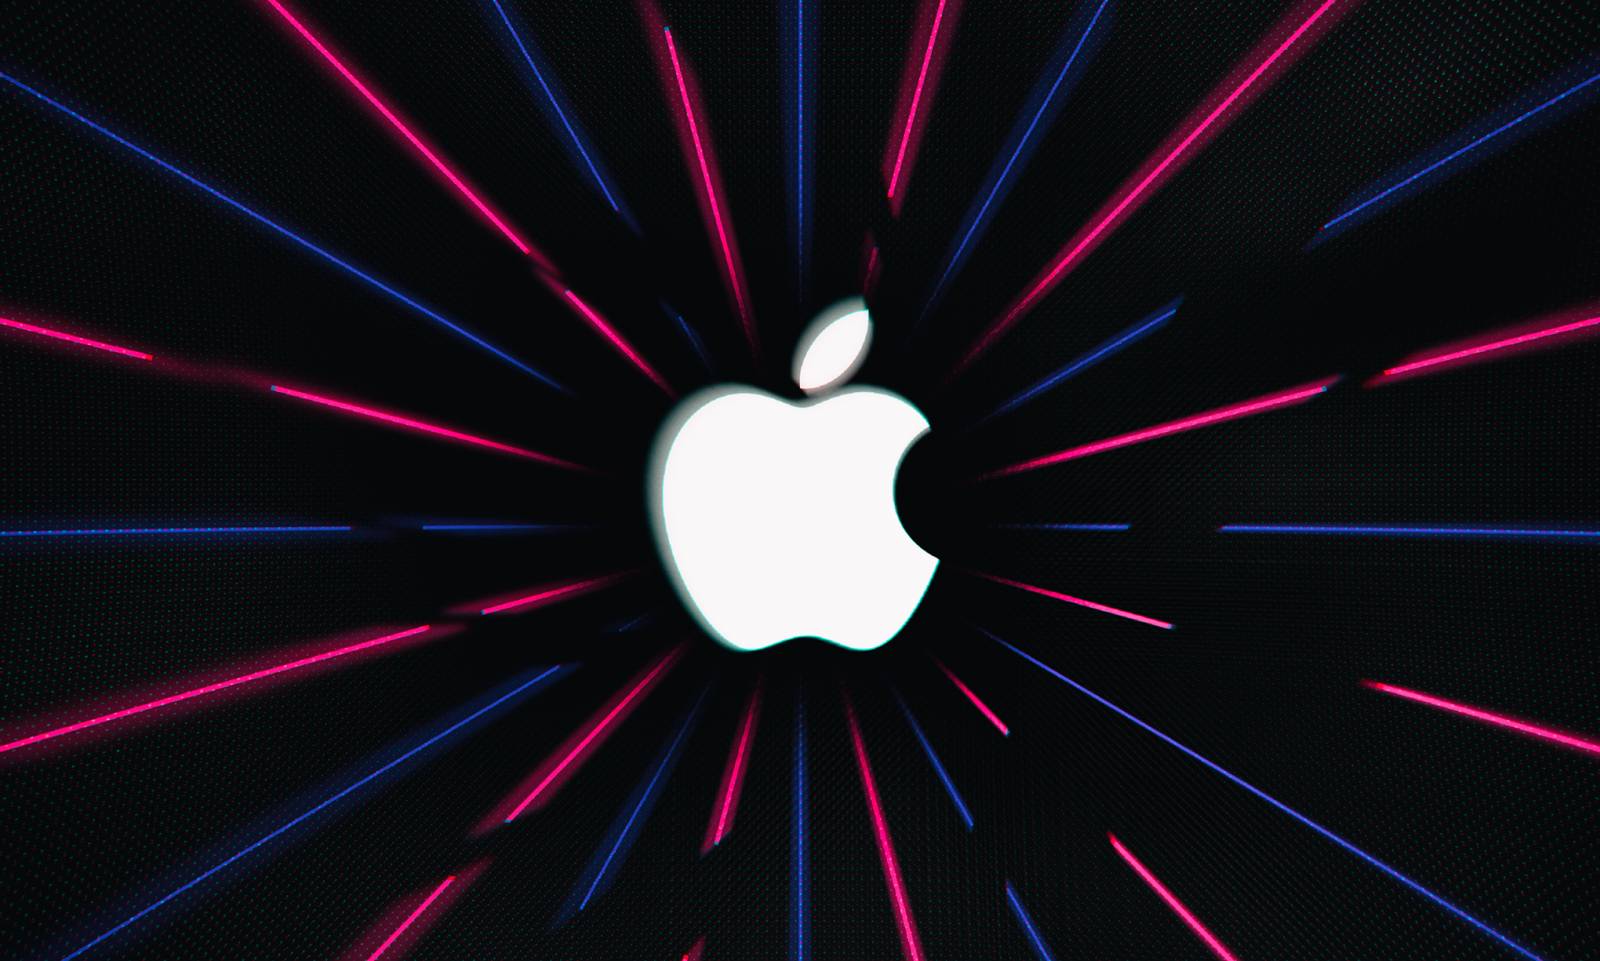 Apple Problema GRAVA Descoperita in iPhone, iPad Mac